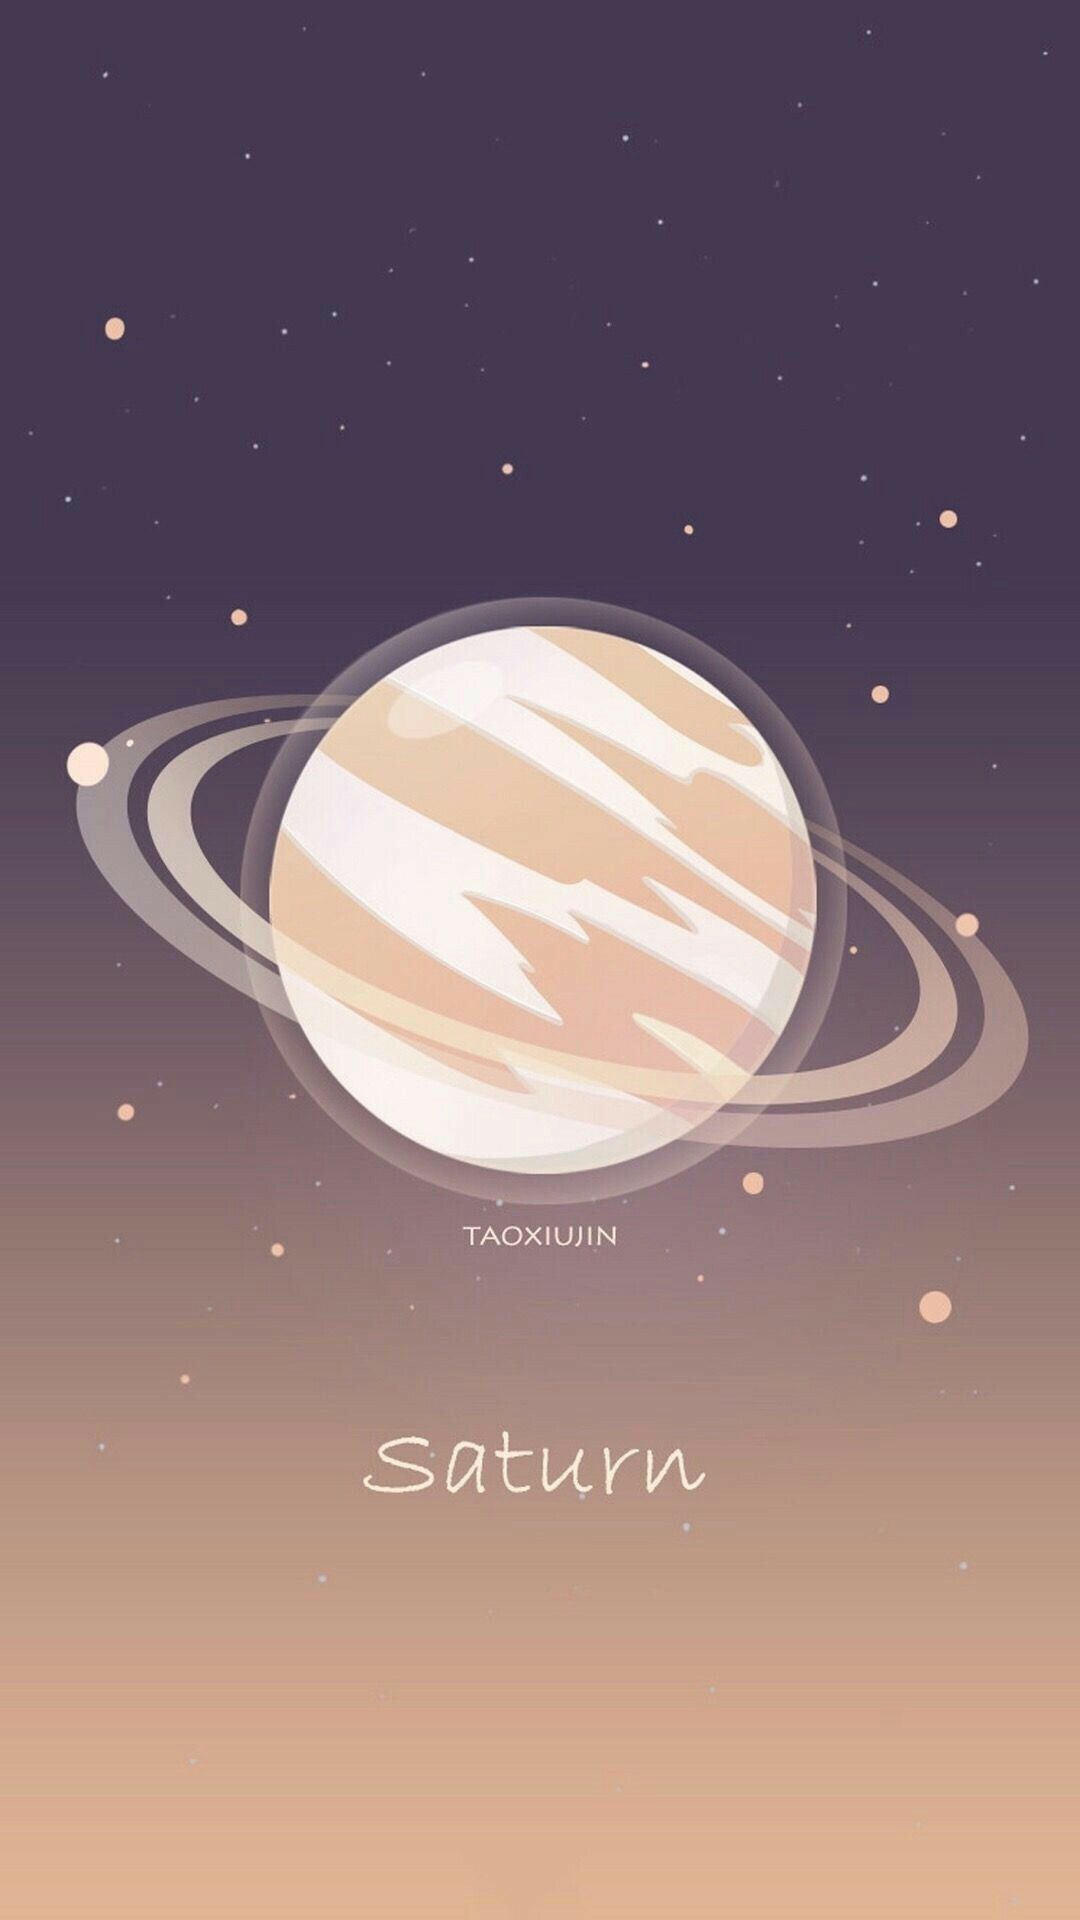 Saturn. Planets wallpaper, Galaxy wallpaper, Wallpaper space